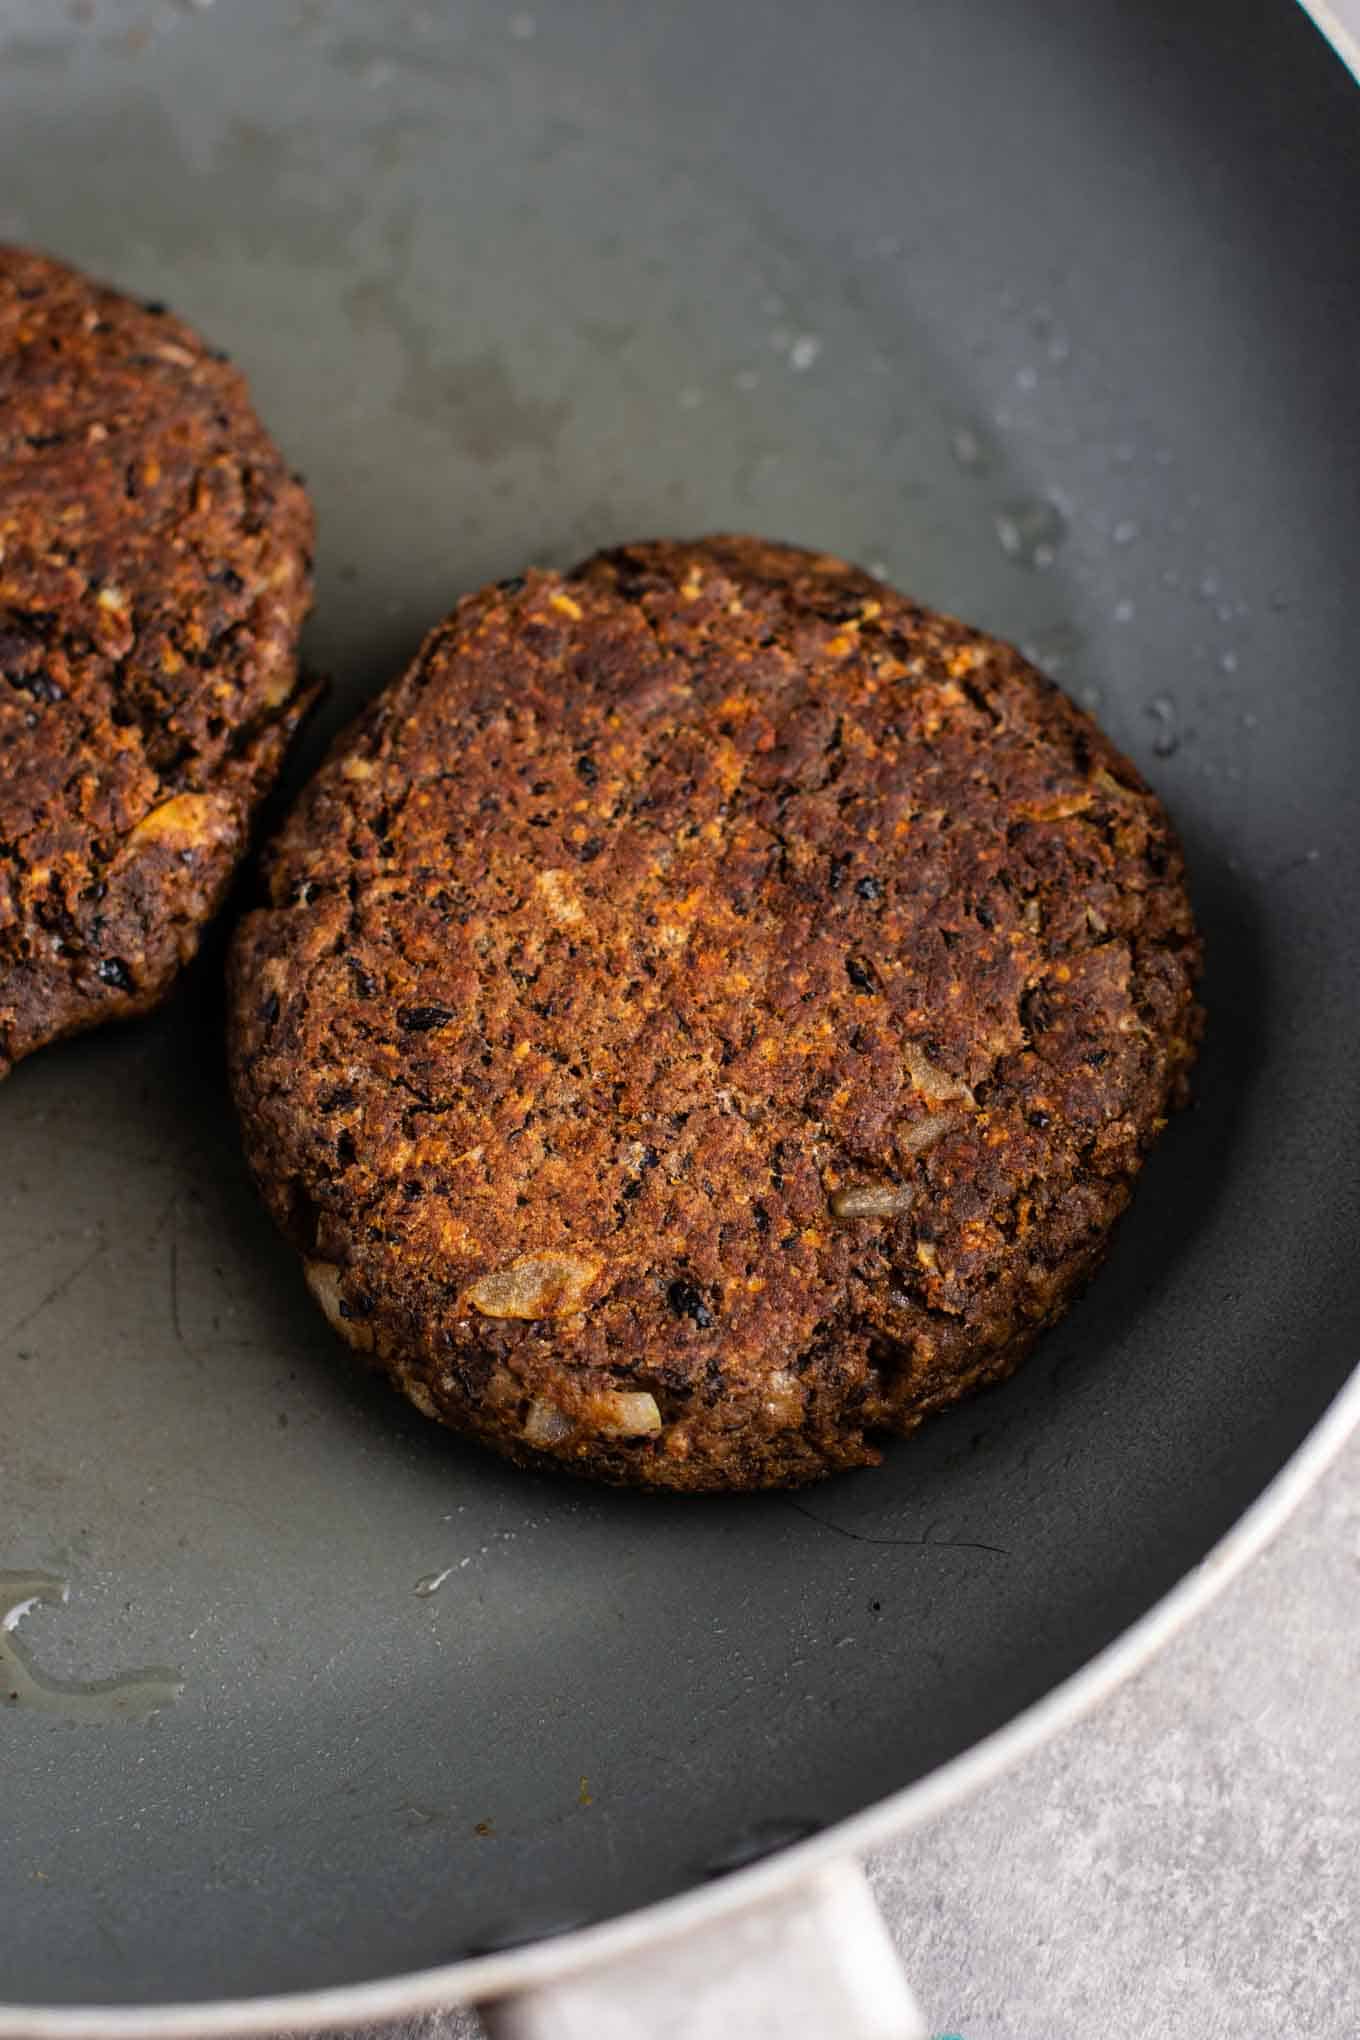 meatless burger recipe homemade